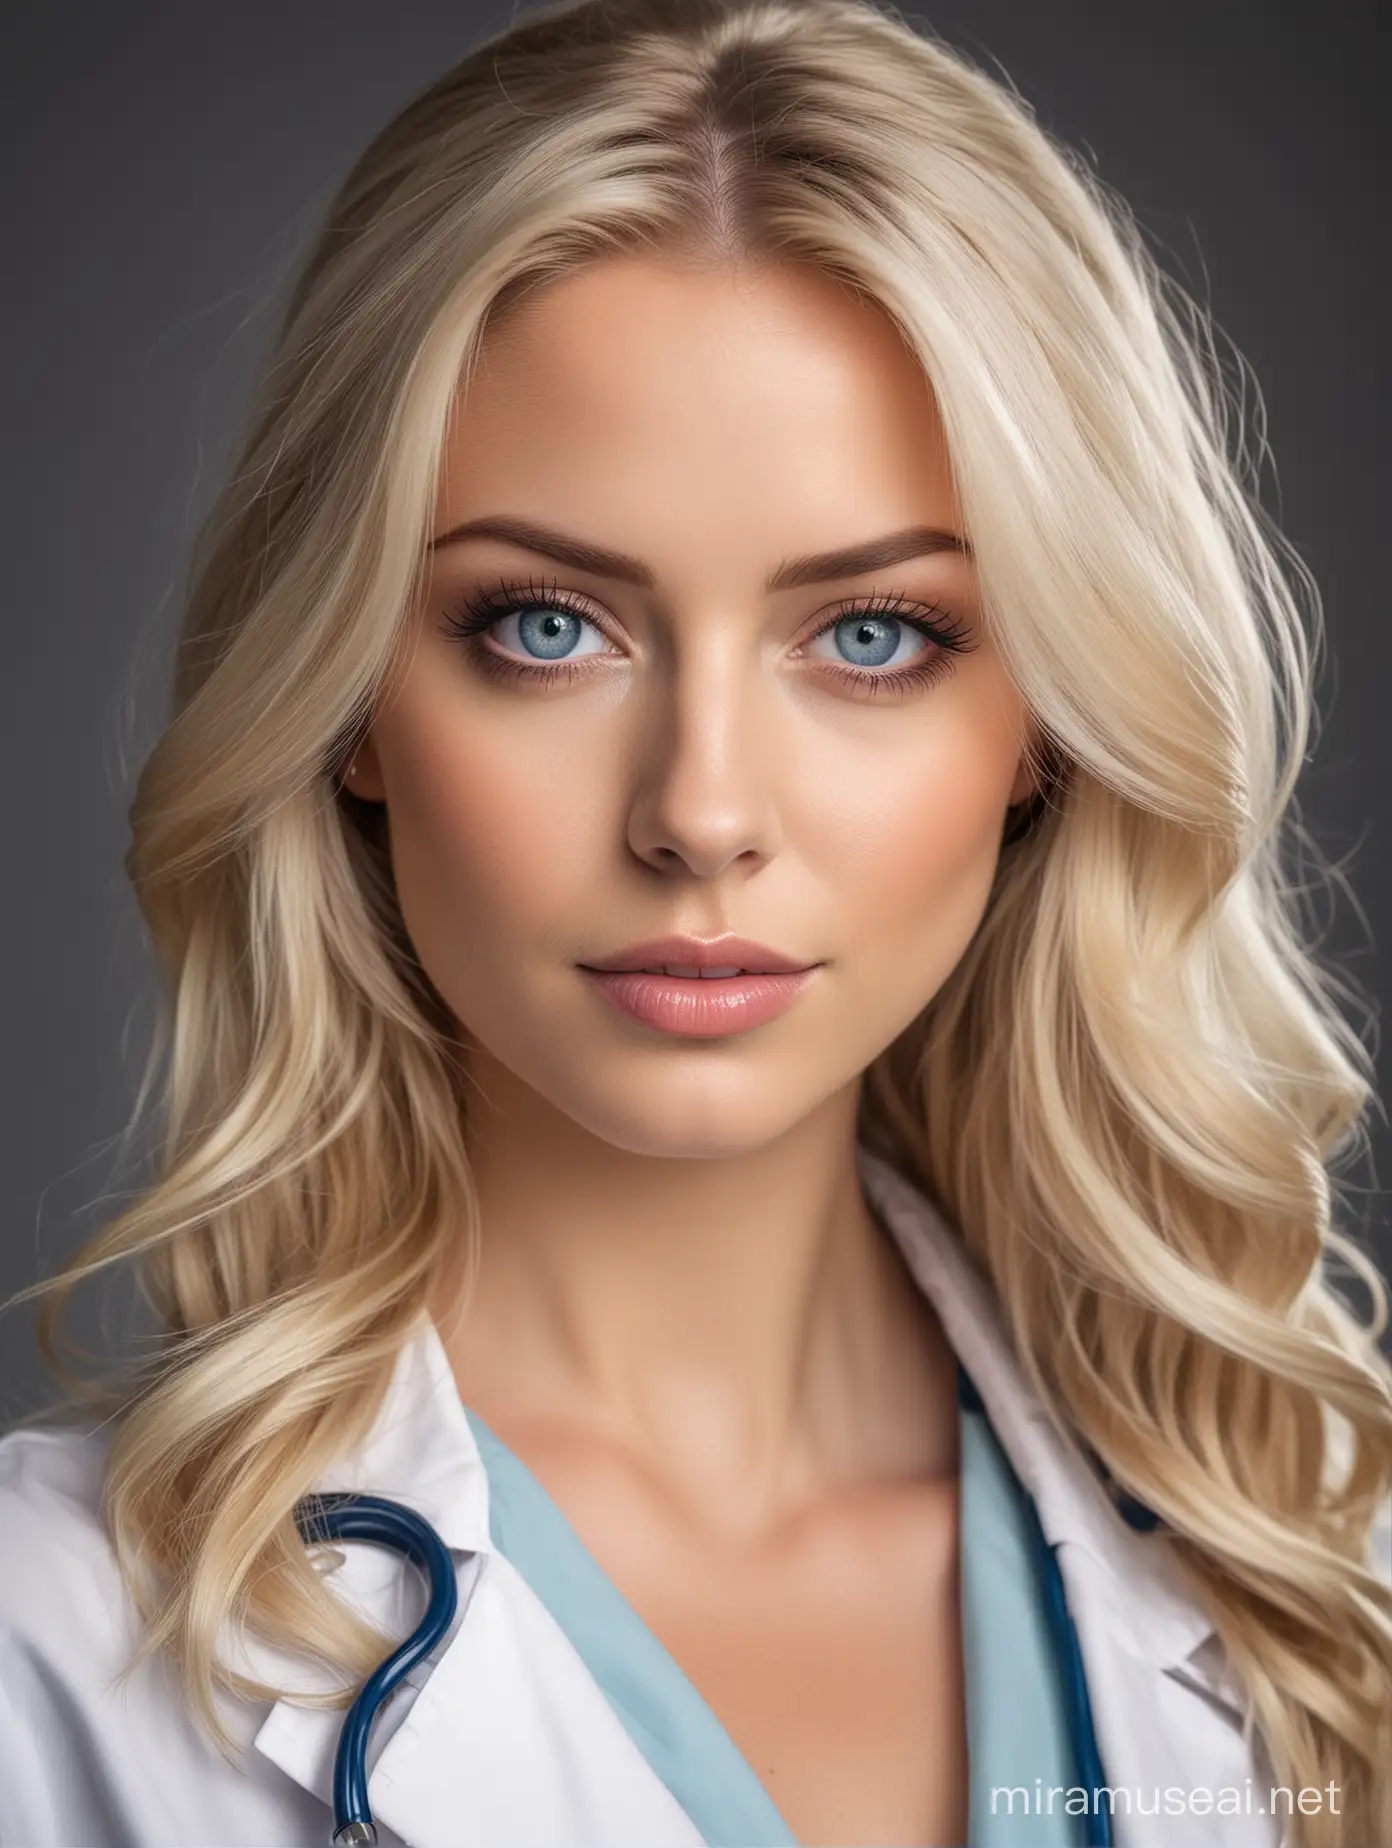 Blonde Doctor with Blue Eyes Elegant Female Physician Portrait